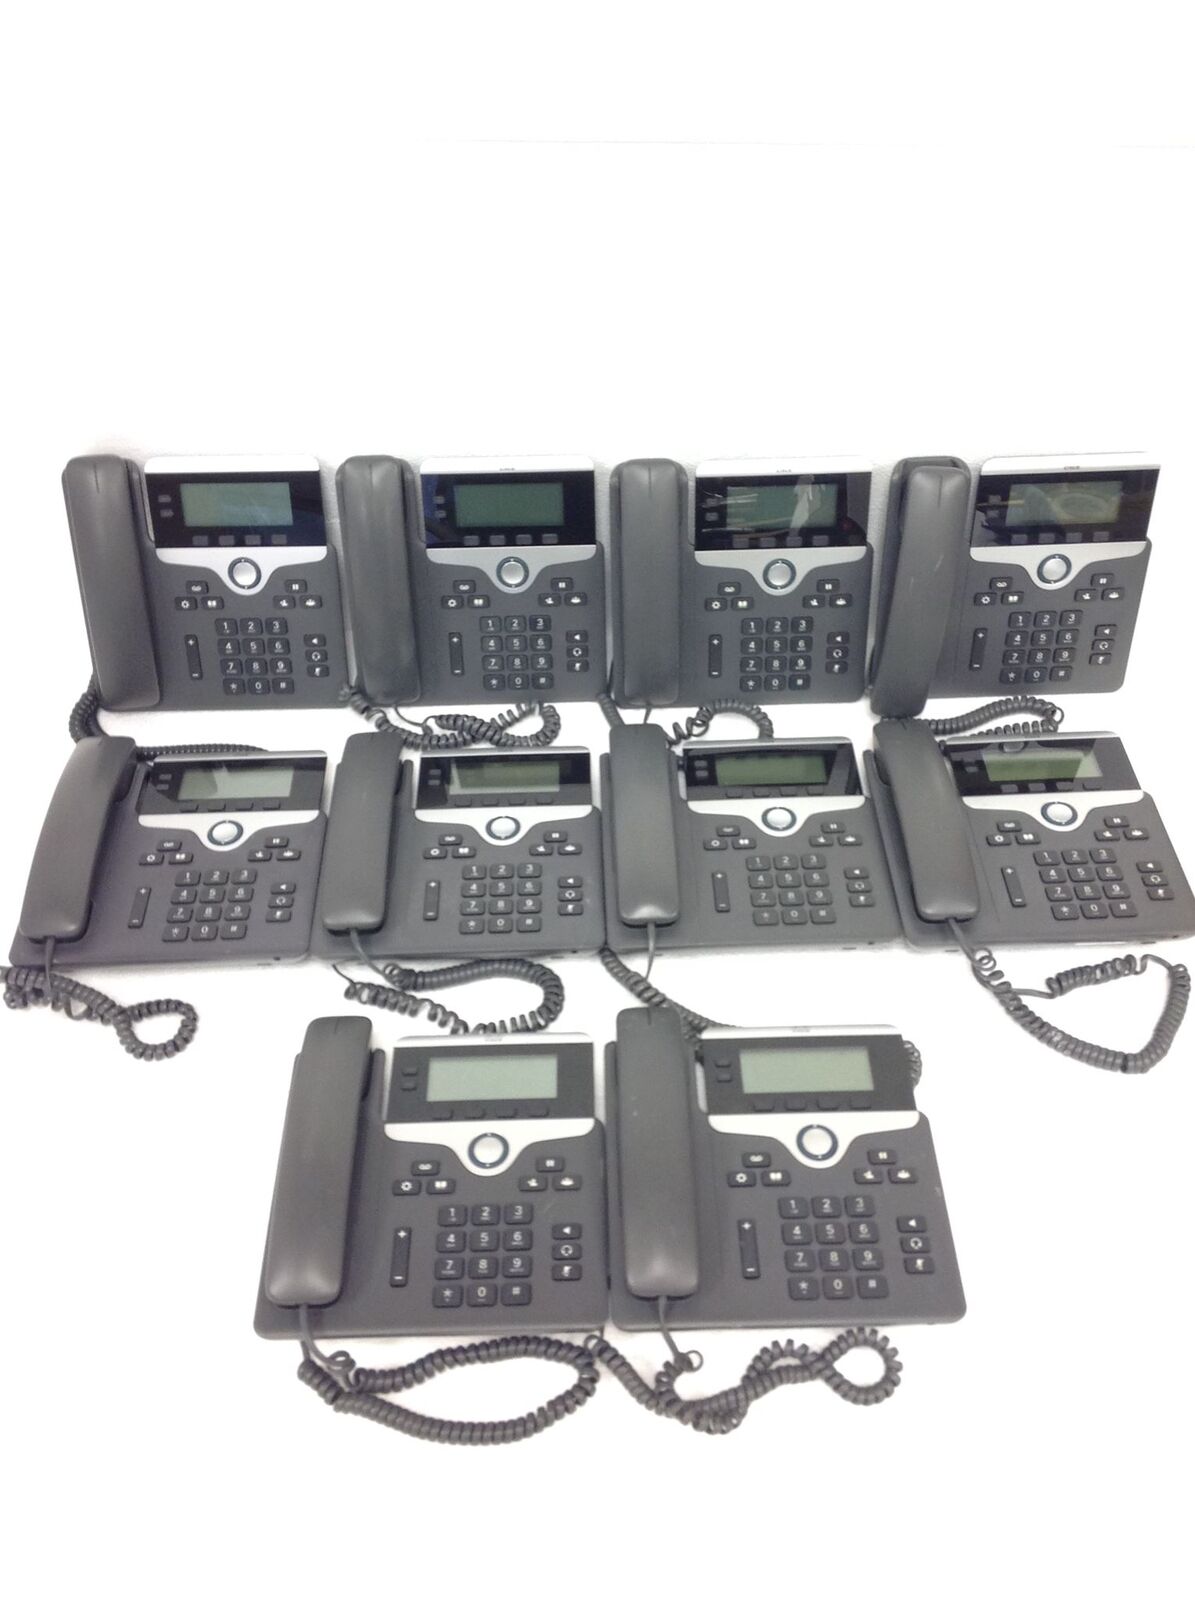 10x CISCO CP-7821 VOIP IP Business Telephone w/Handset WORKING 